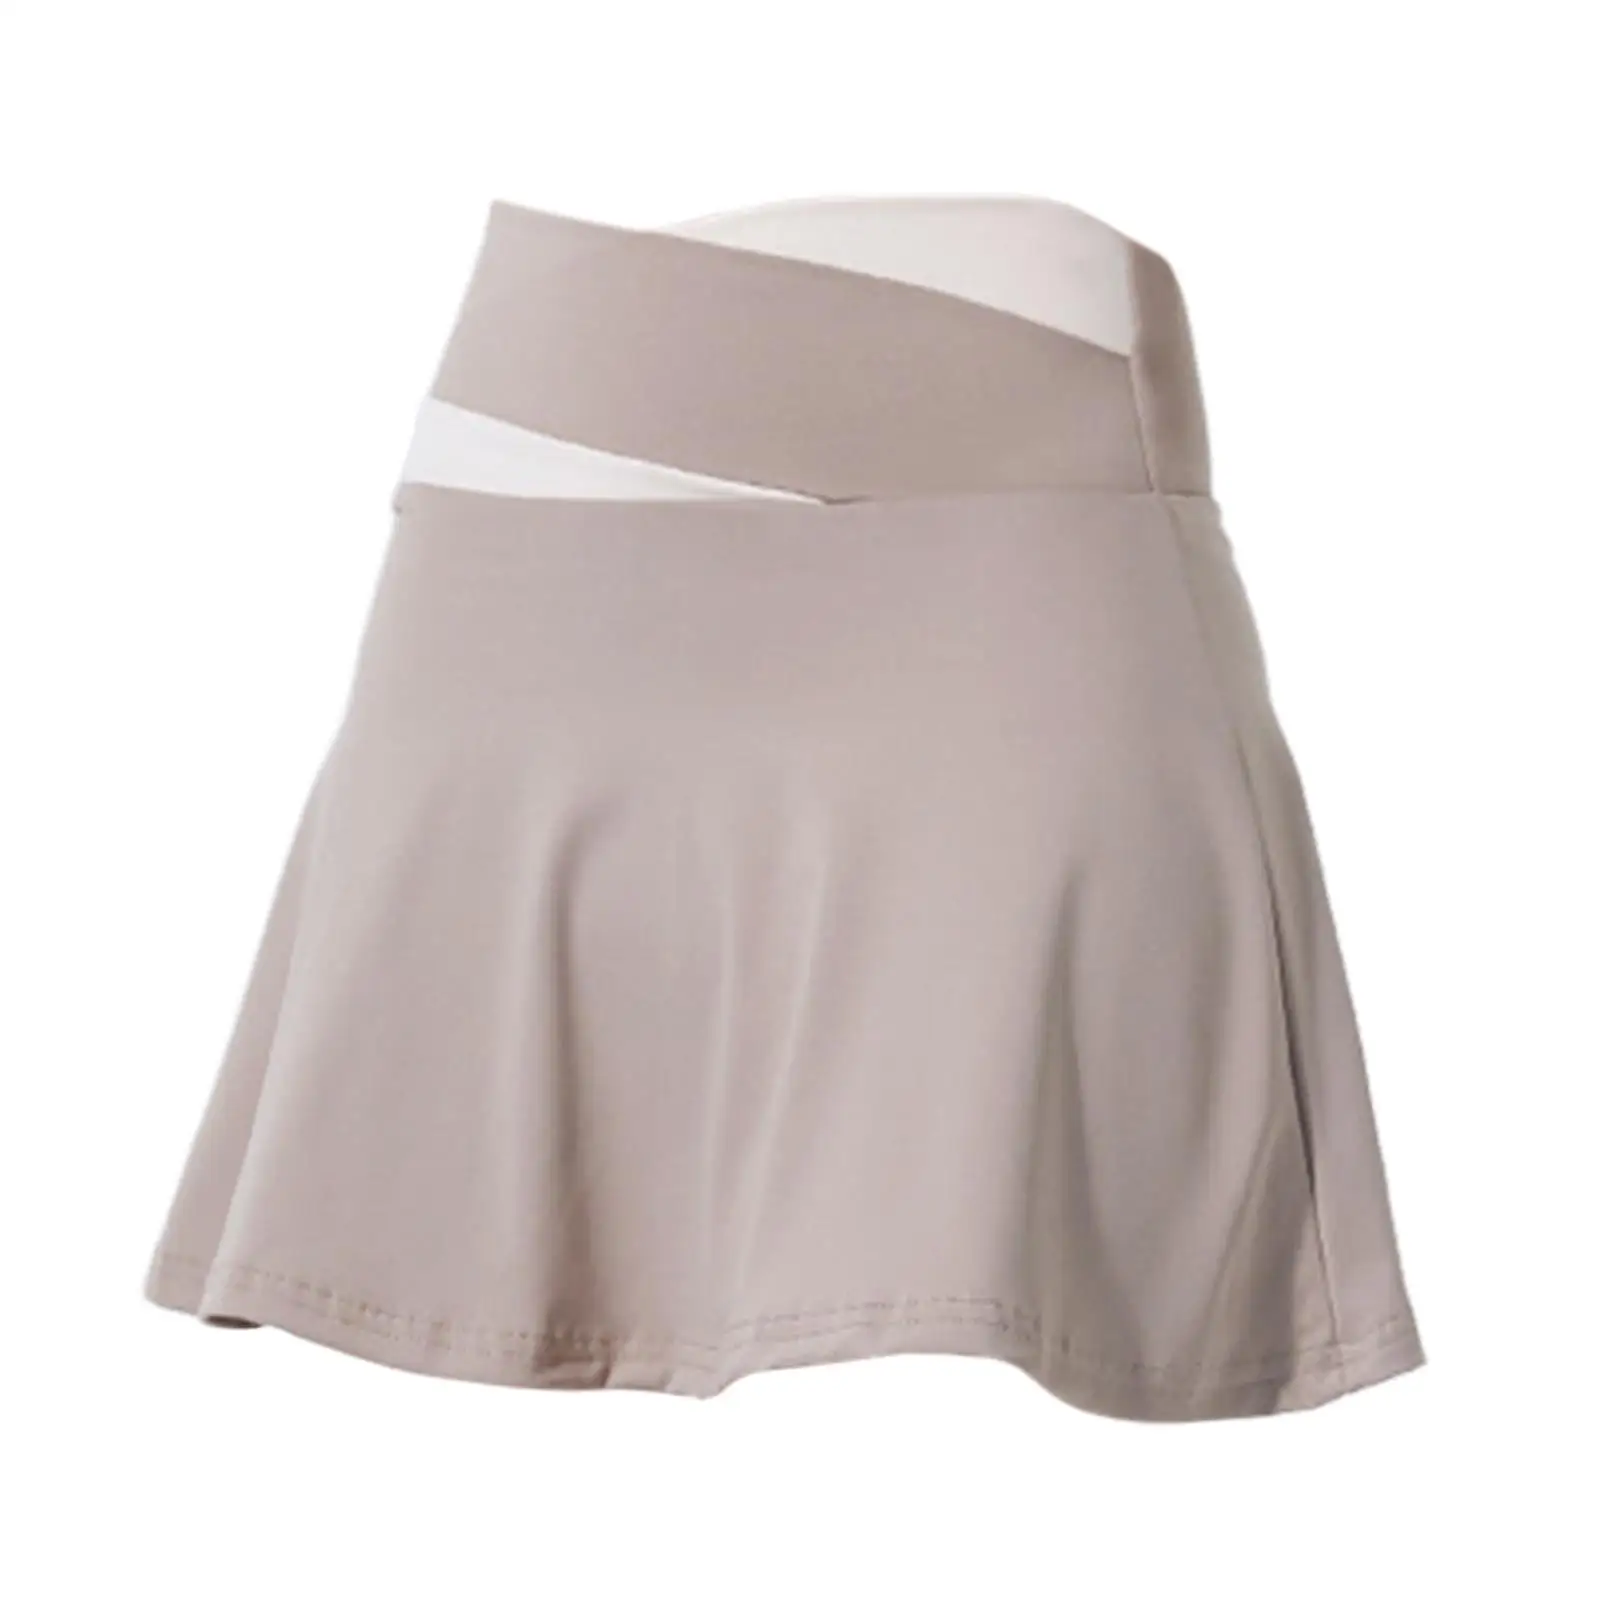 Tennis Skirts Short Skirt Casual Mini Skirt Tracksuit Outfits Womens Skirt Badminton Skirts for Golf Sports Gym Fitness Exercise